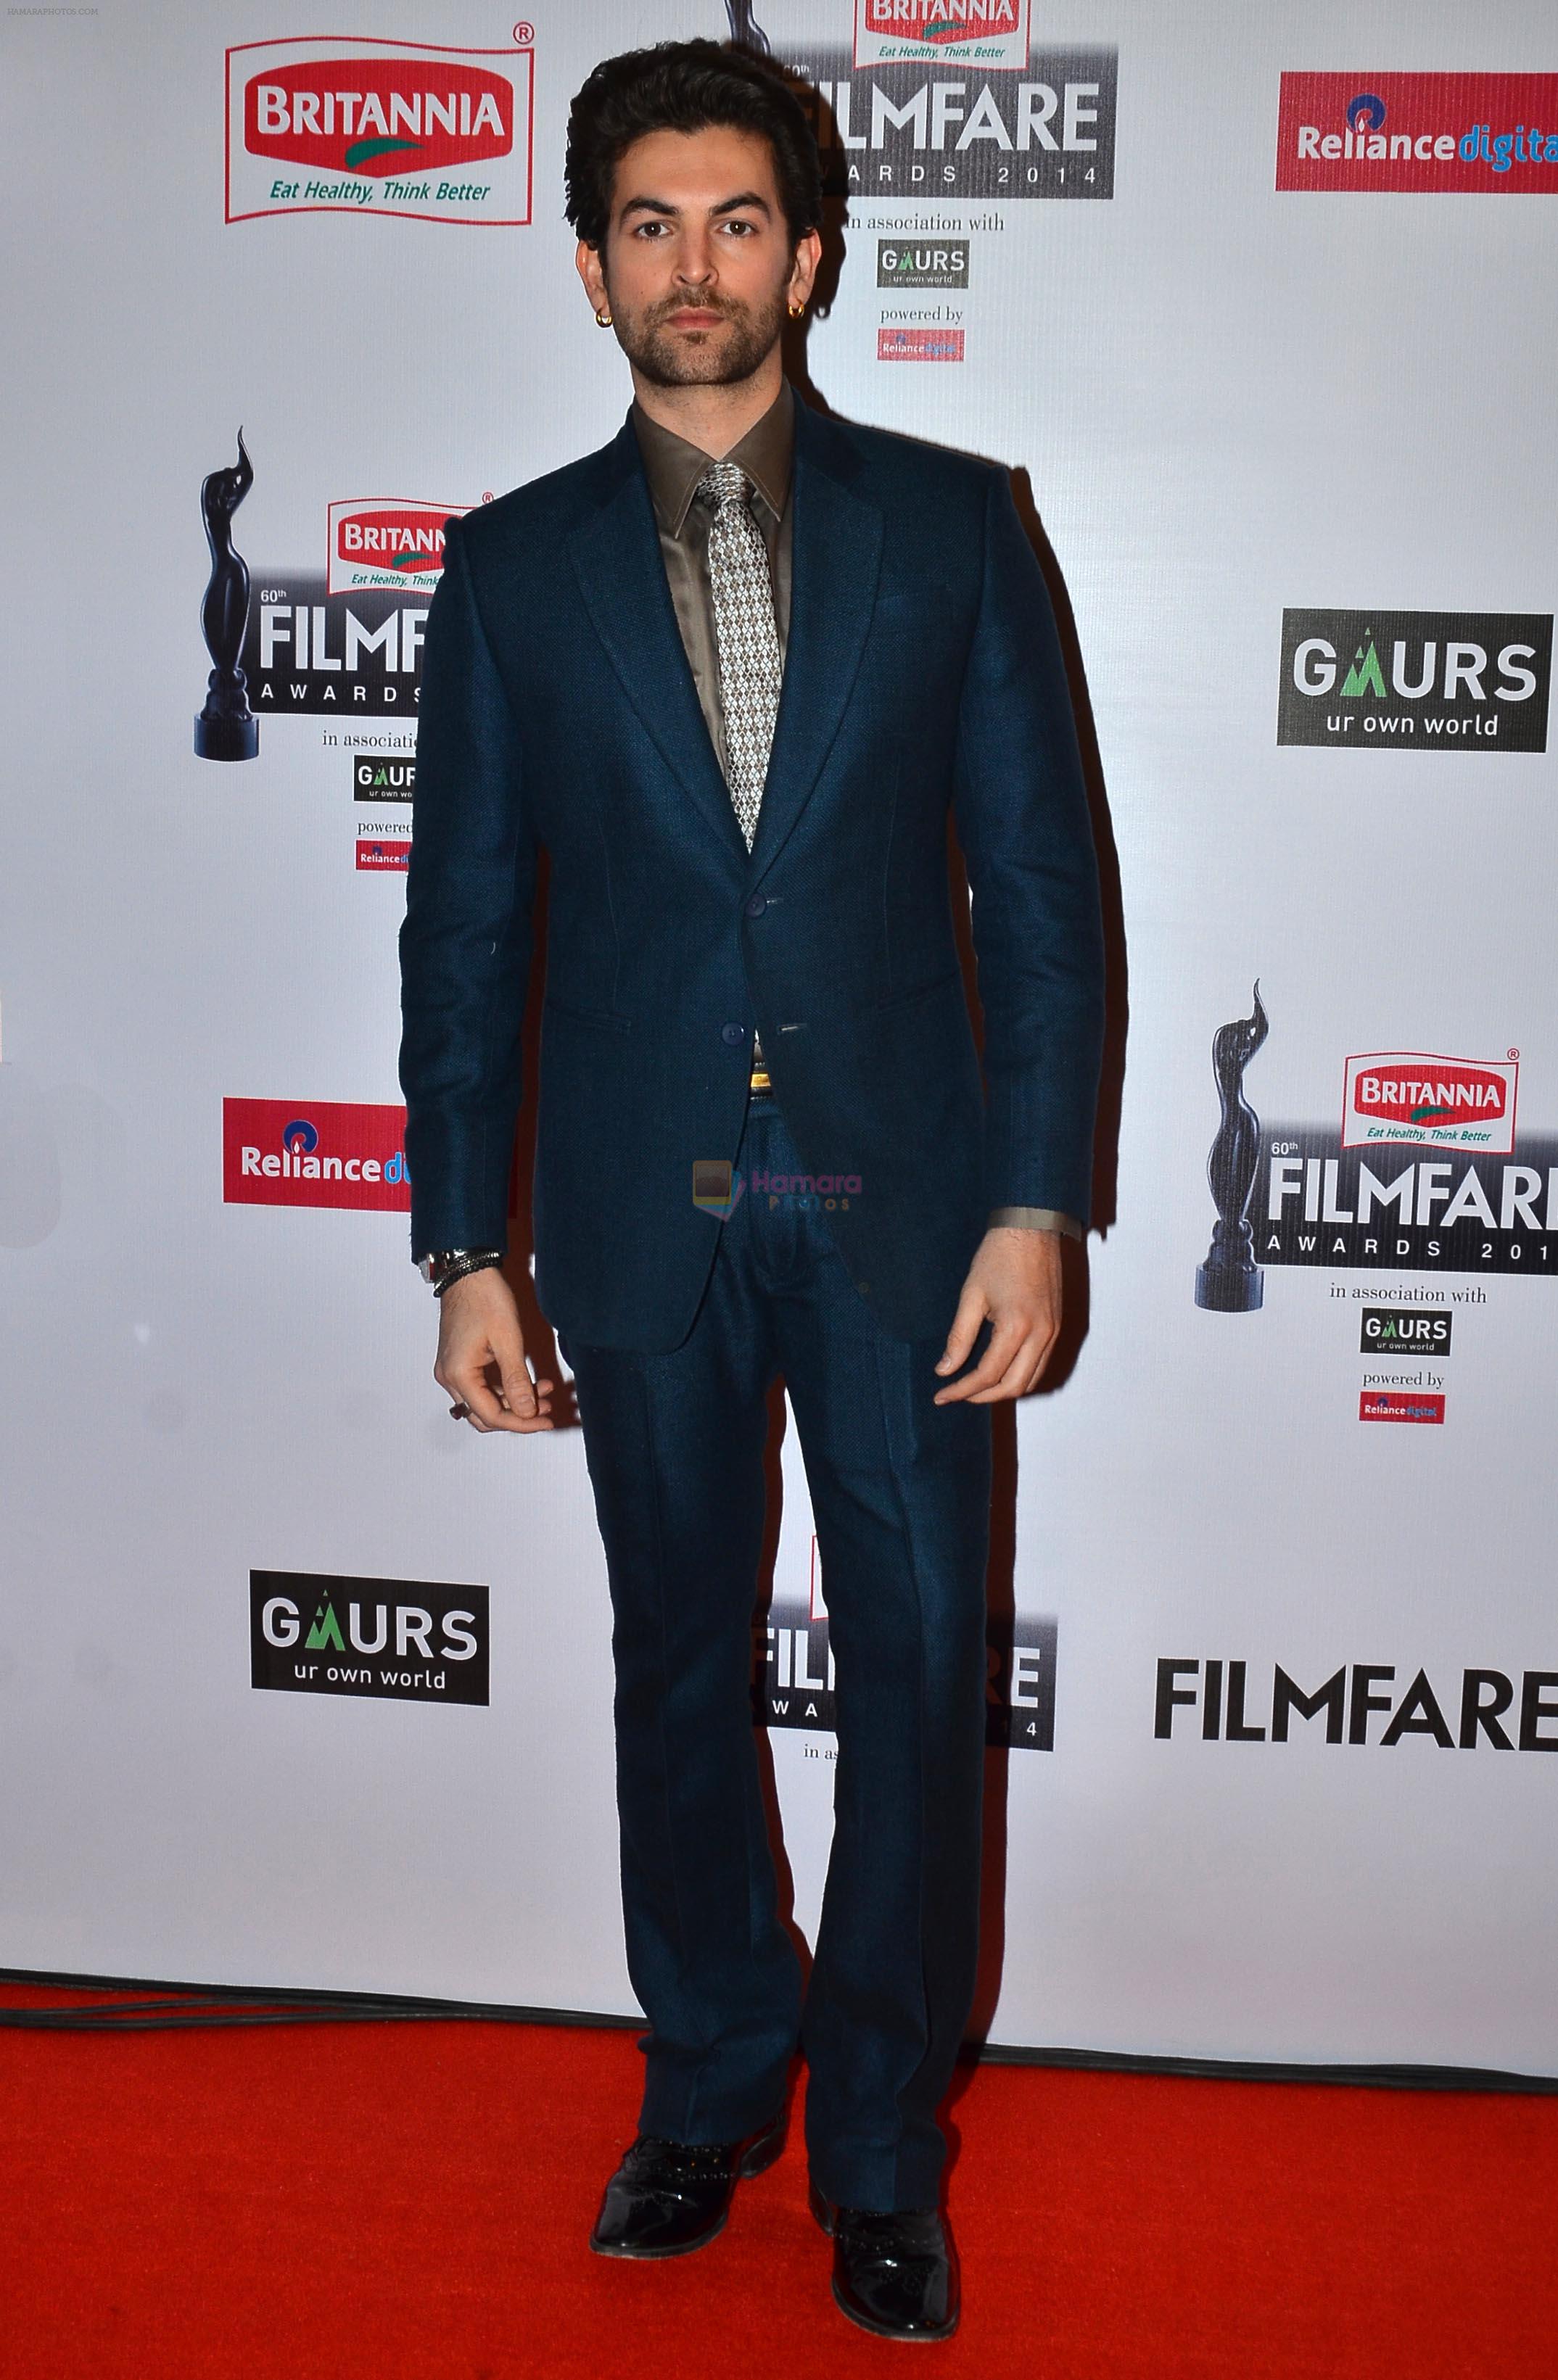 Neil Nitin Mukesh graces the red carpet at the 60th Britannia Filmfare Awards